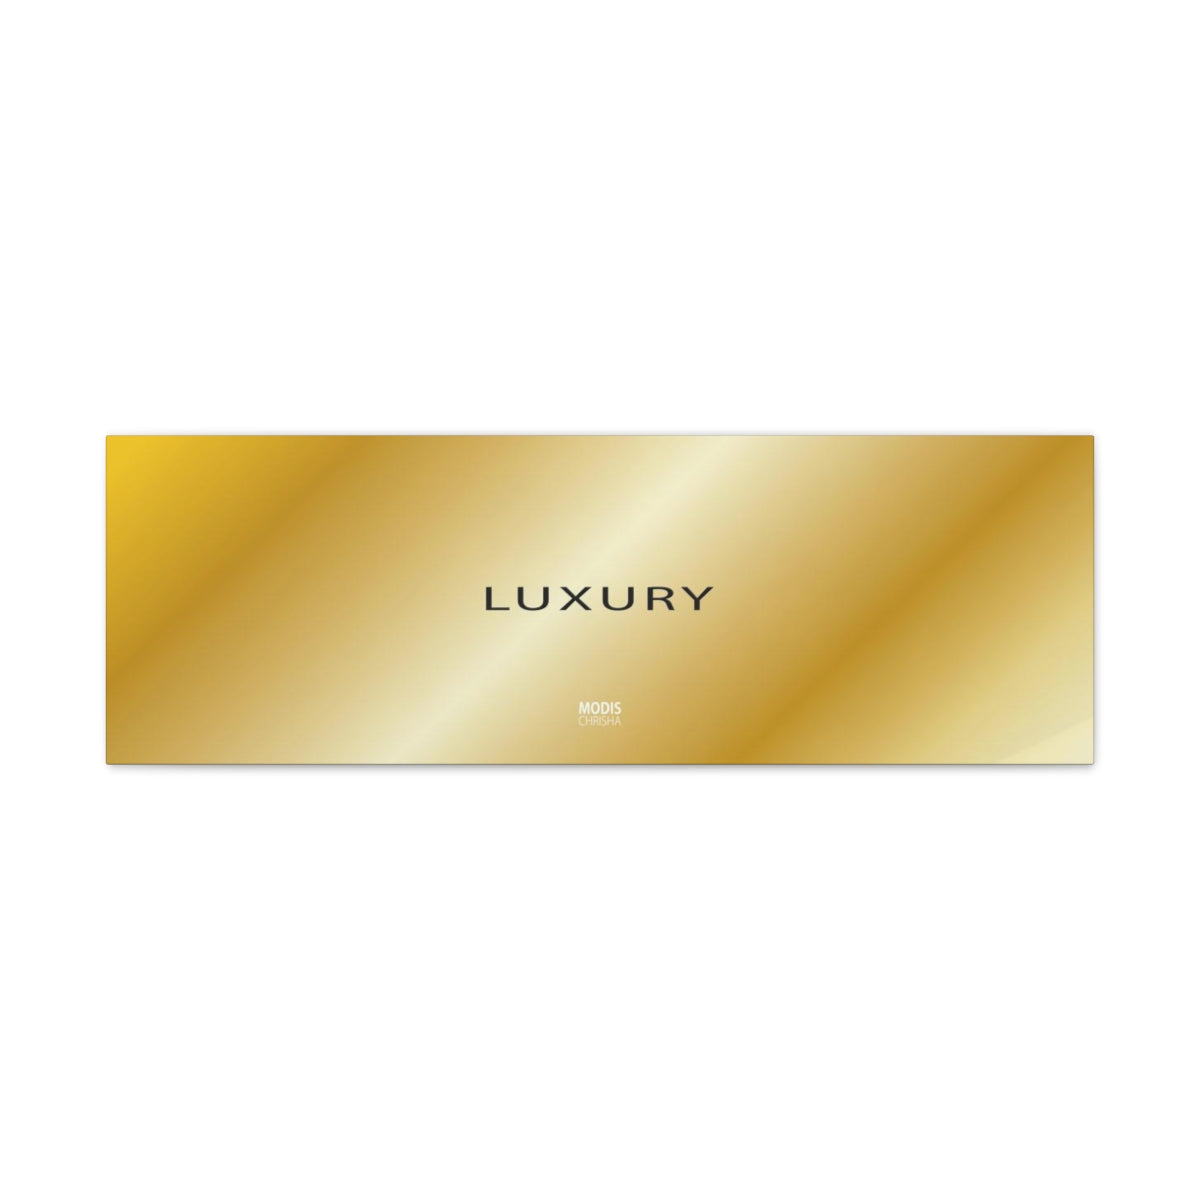 Canvas Gallery Wrap 36“ x 12“ - Design Luxury